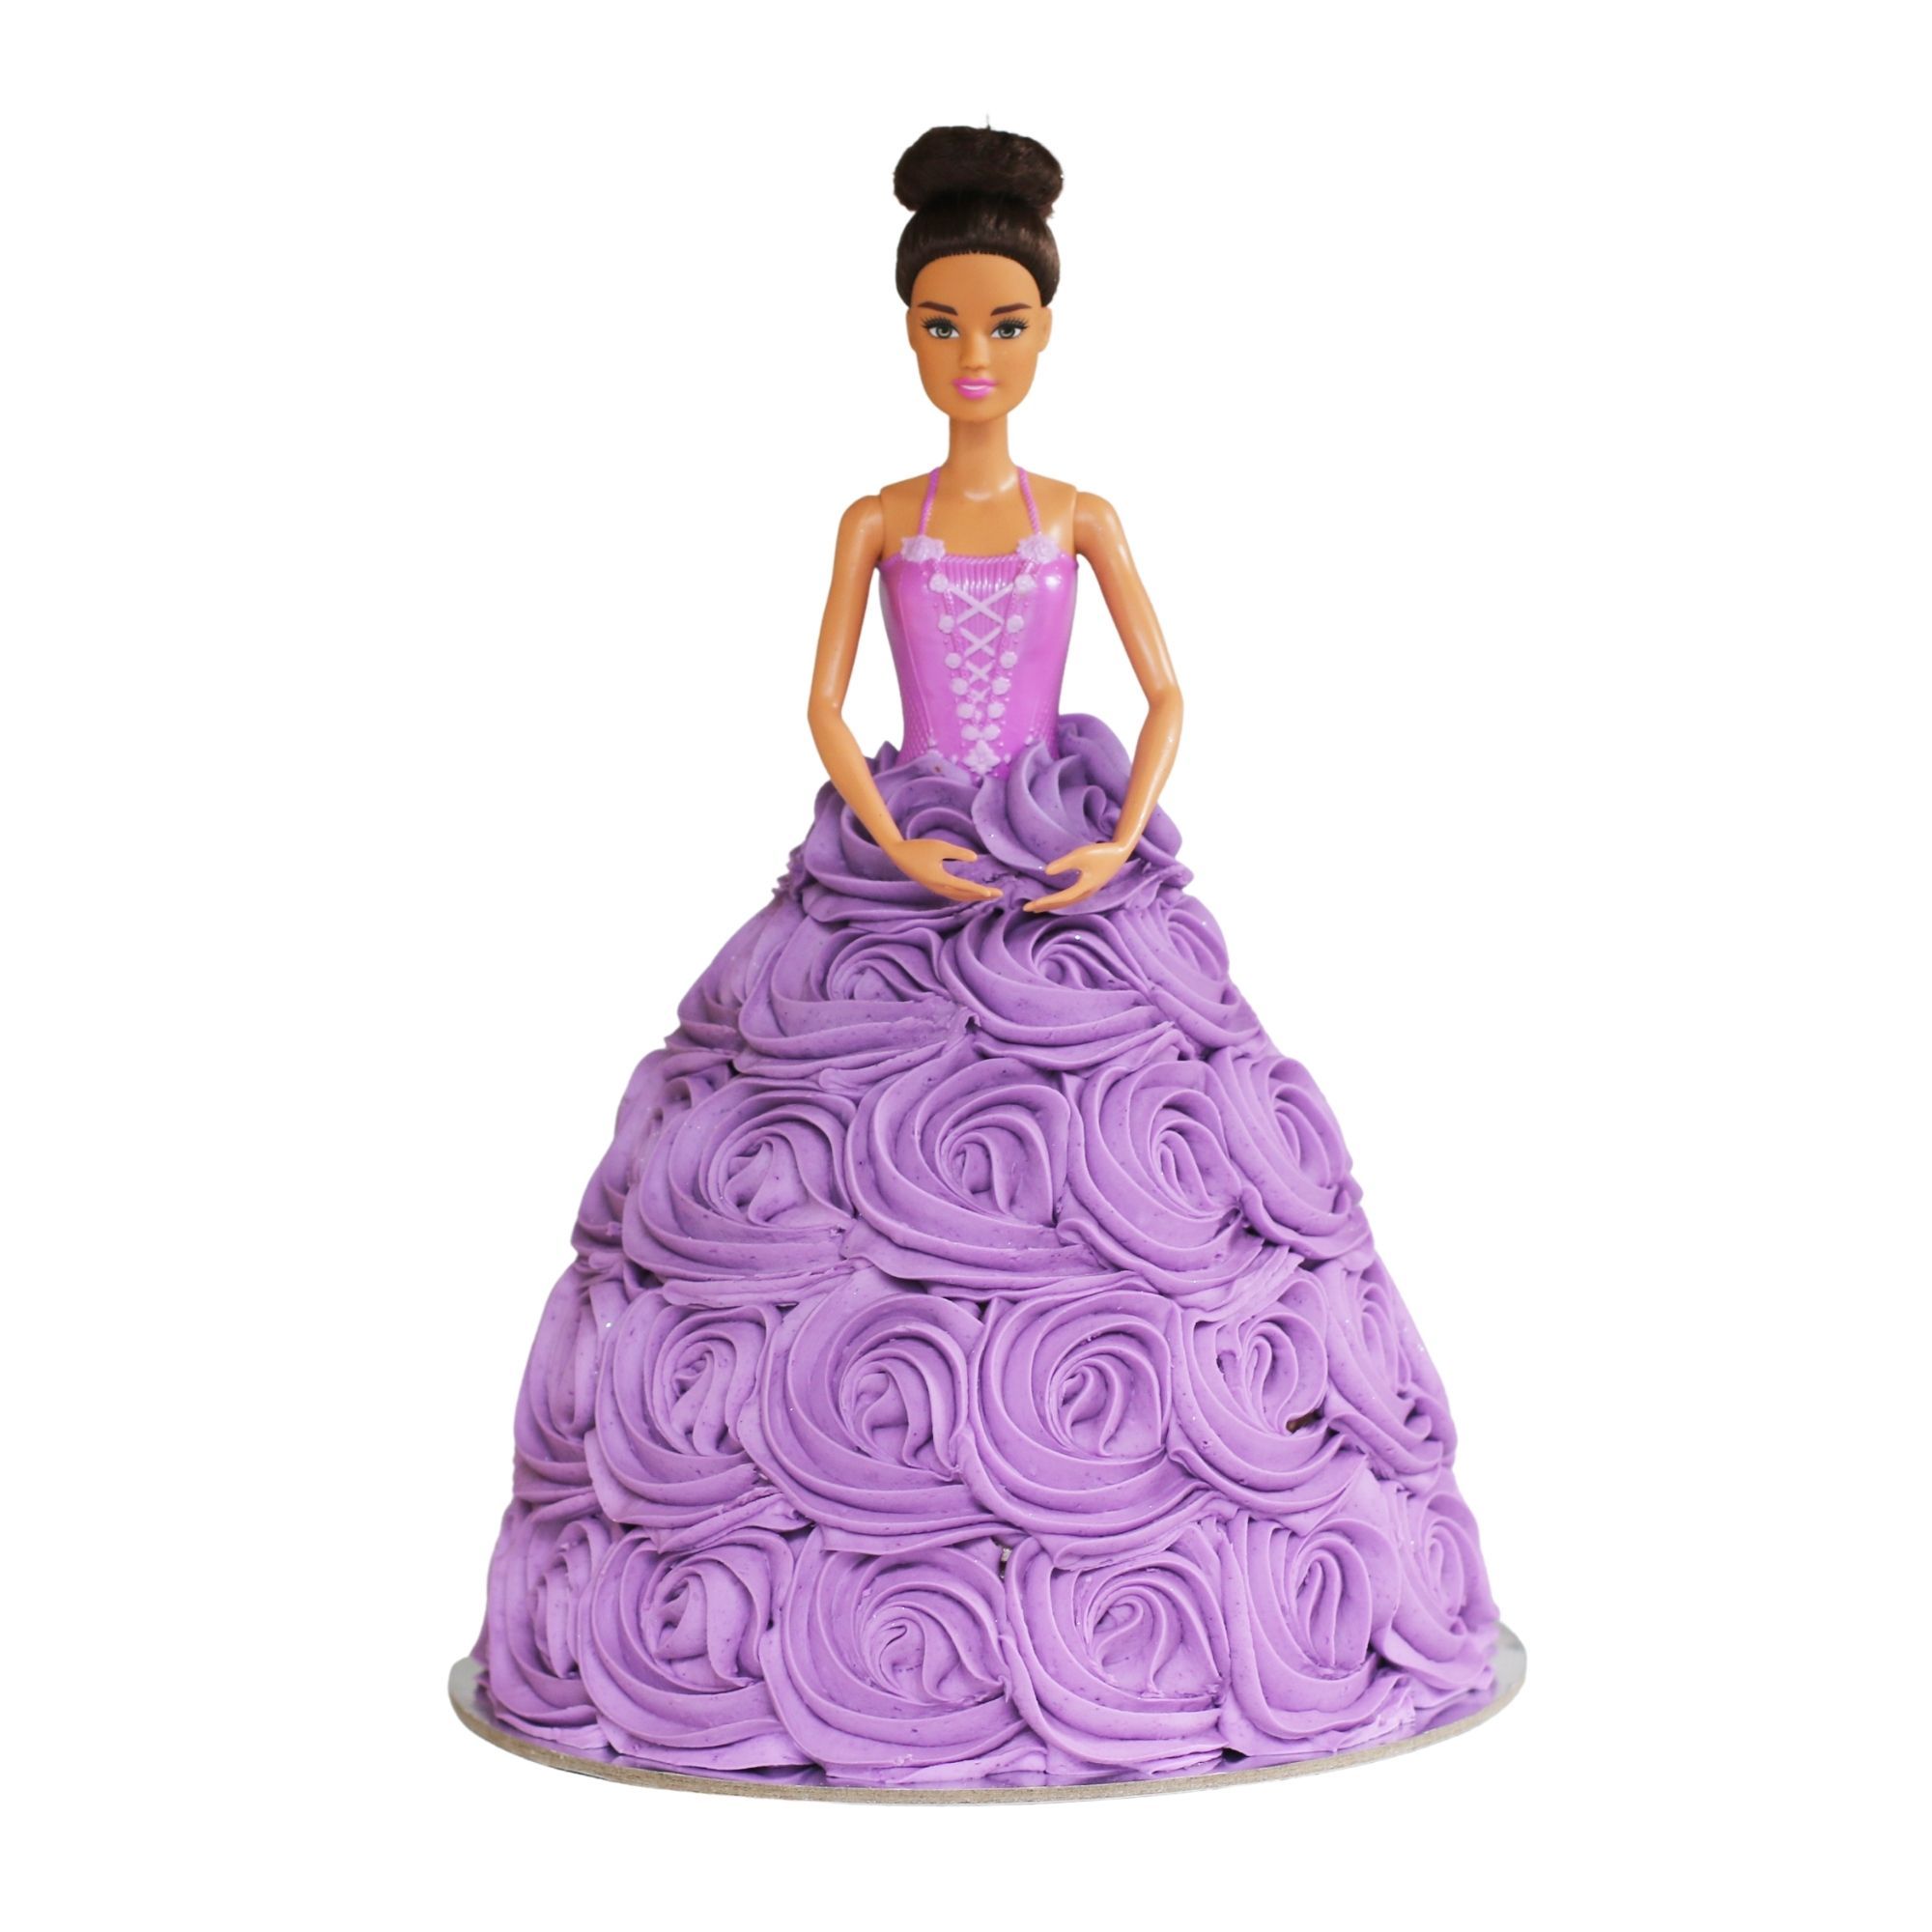 straal Mangel Susteen Ballerina Mia Doll Cake - The Cupcake Queens